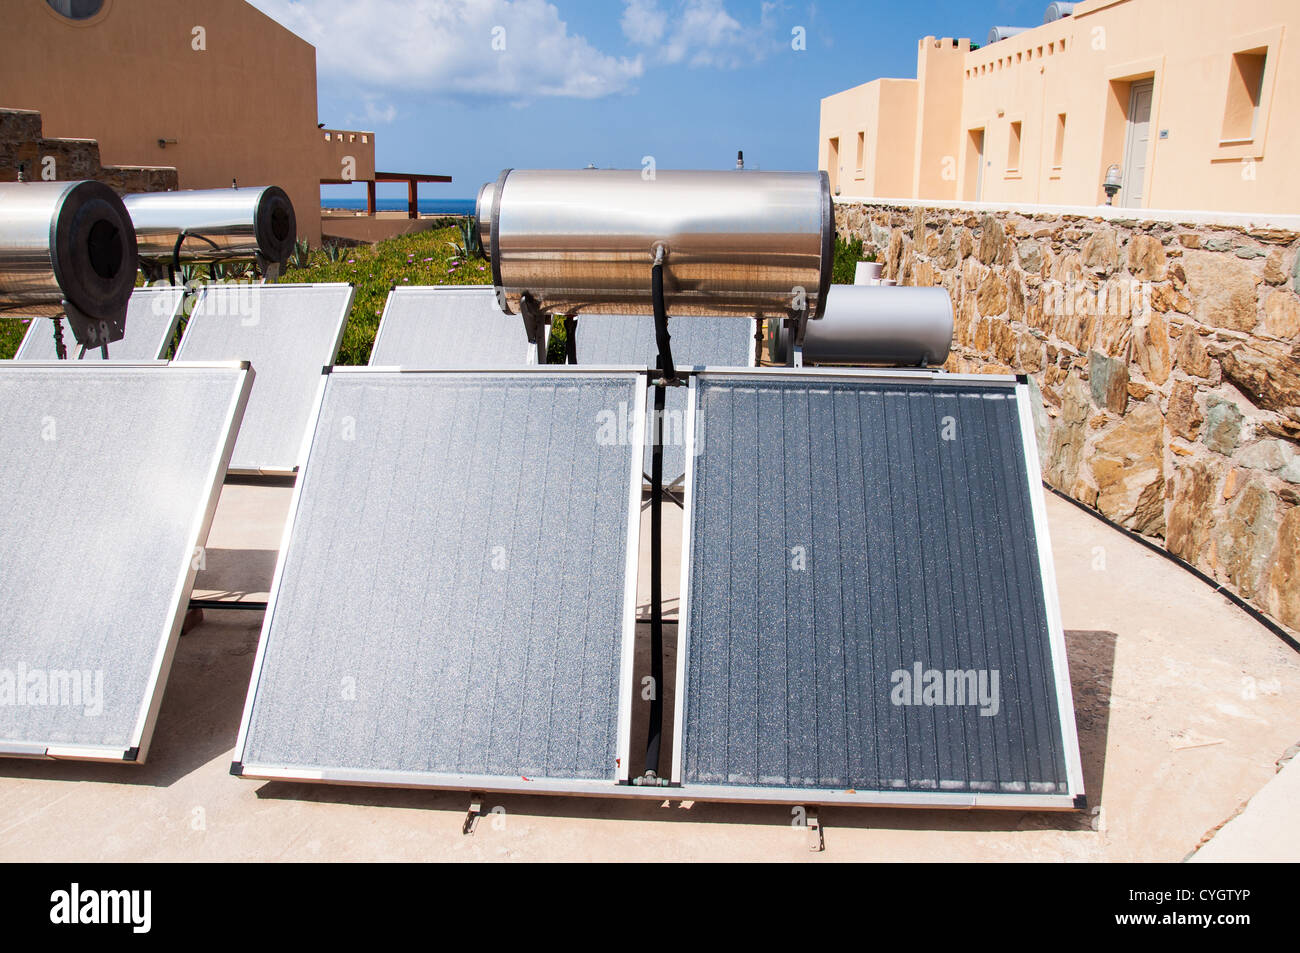 Calentador solar en techo fotografías e imágenes de alta resolución - Alamy